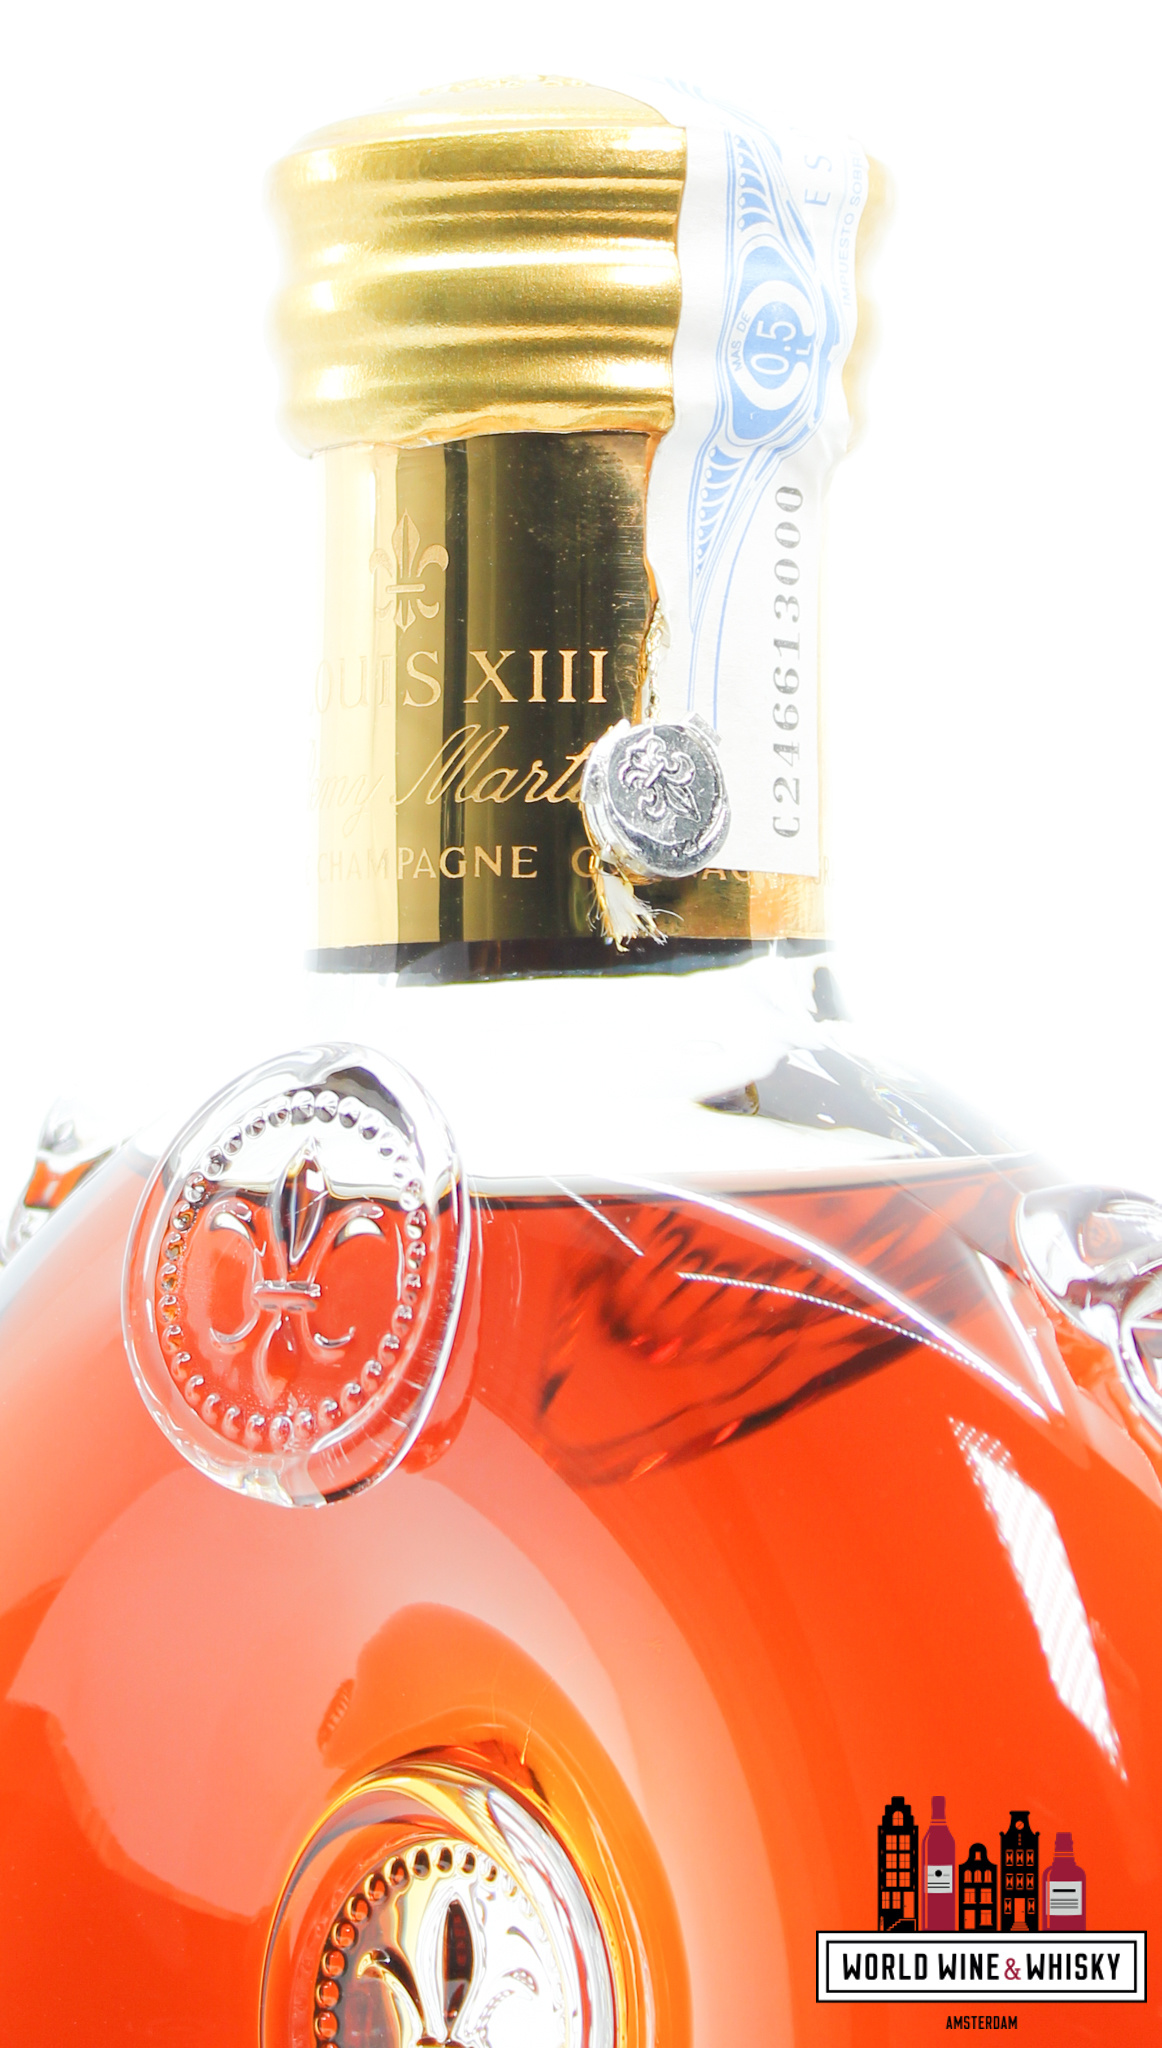 Rémy Martin Remy Martin Louis XIII - Grande Champagne Cognac (90s bottling)